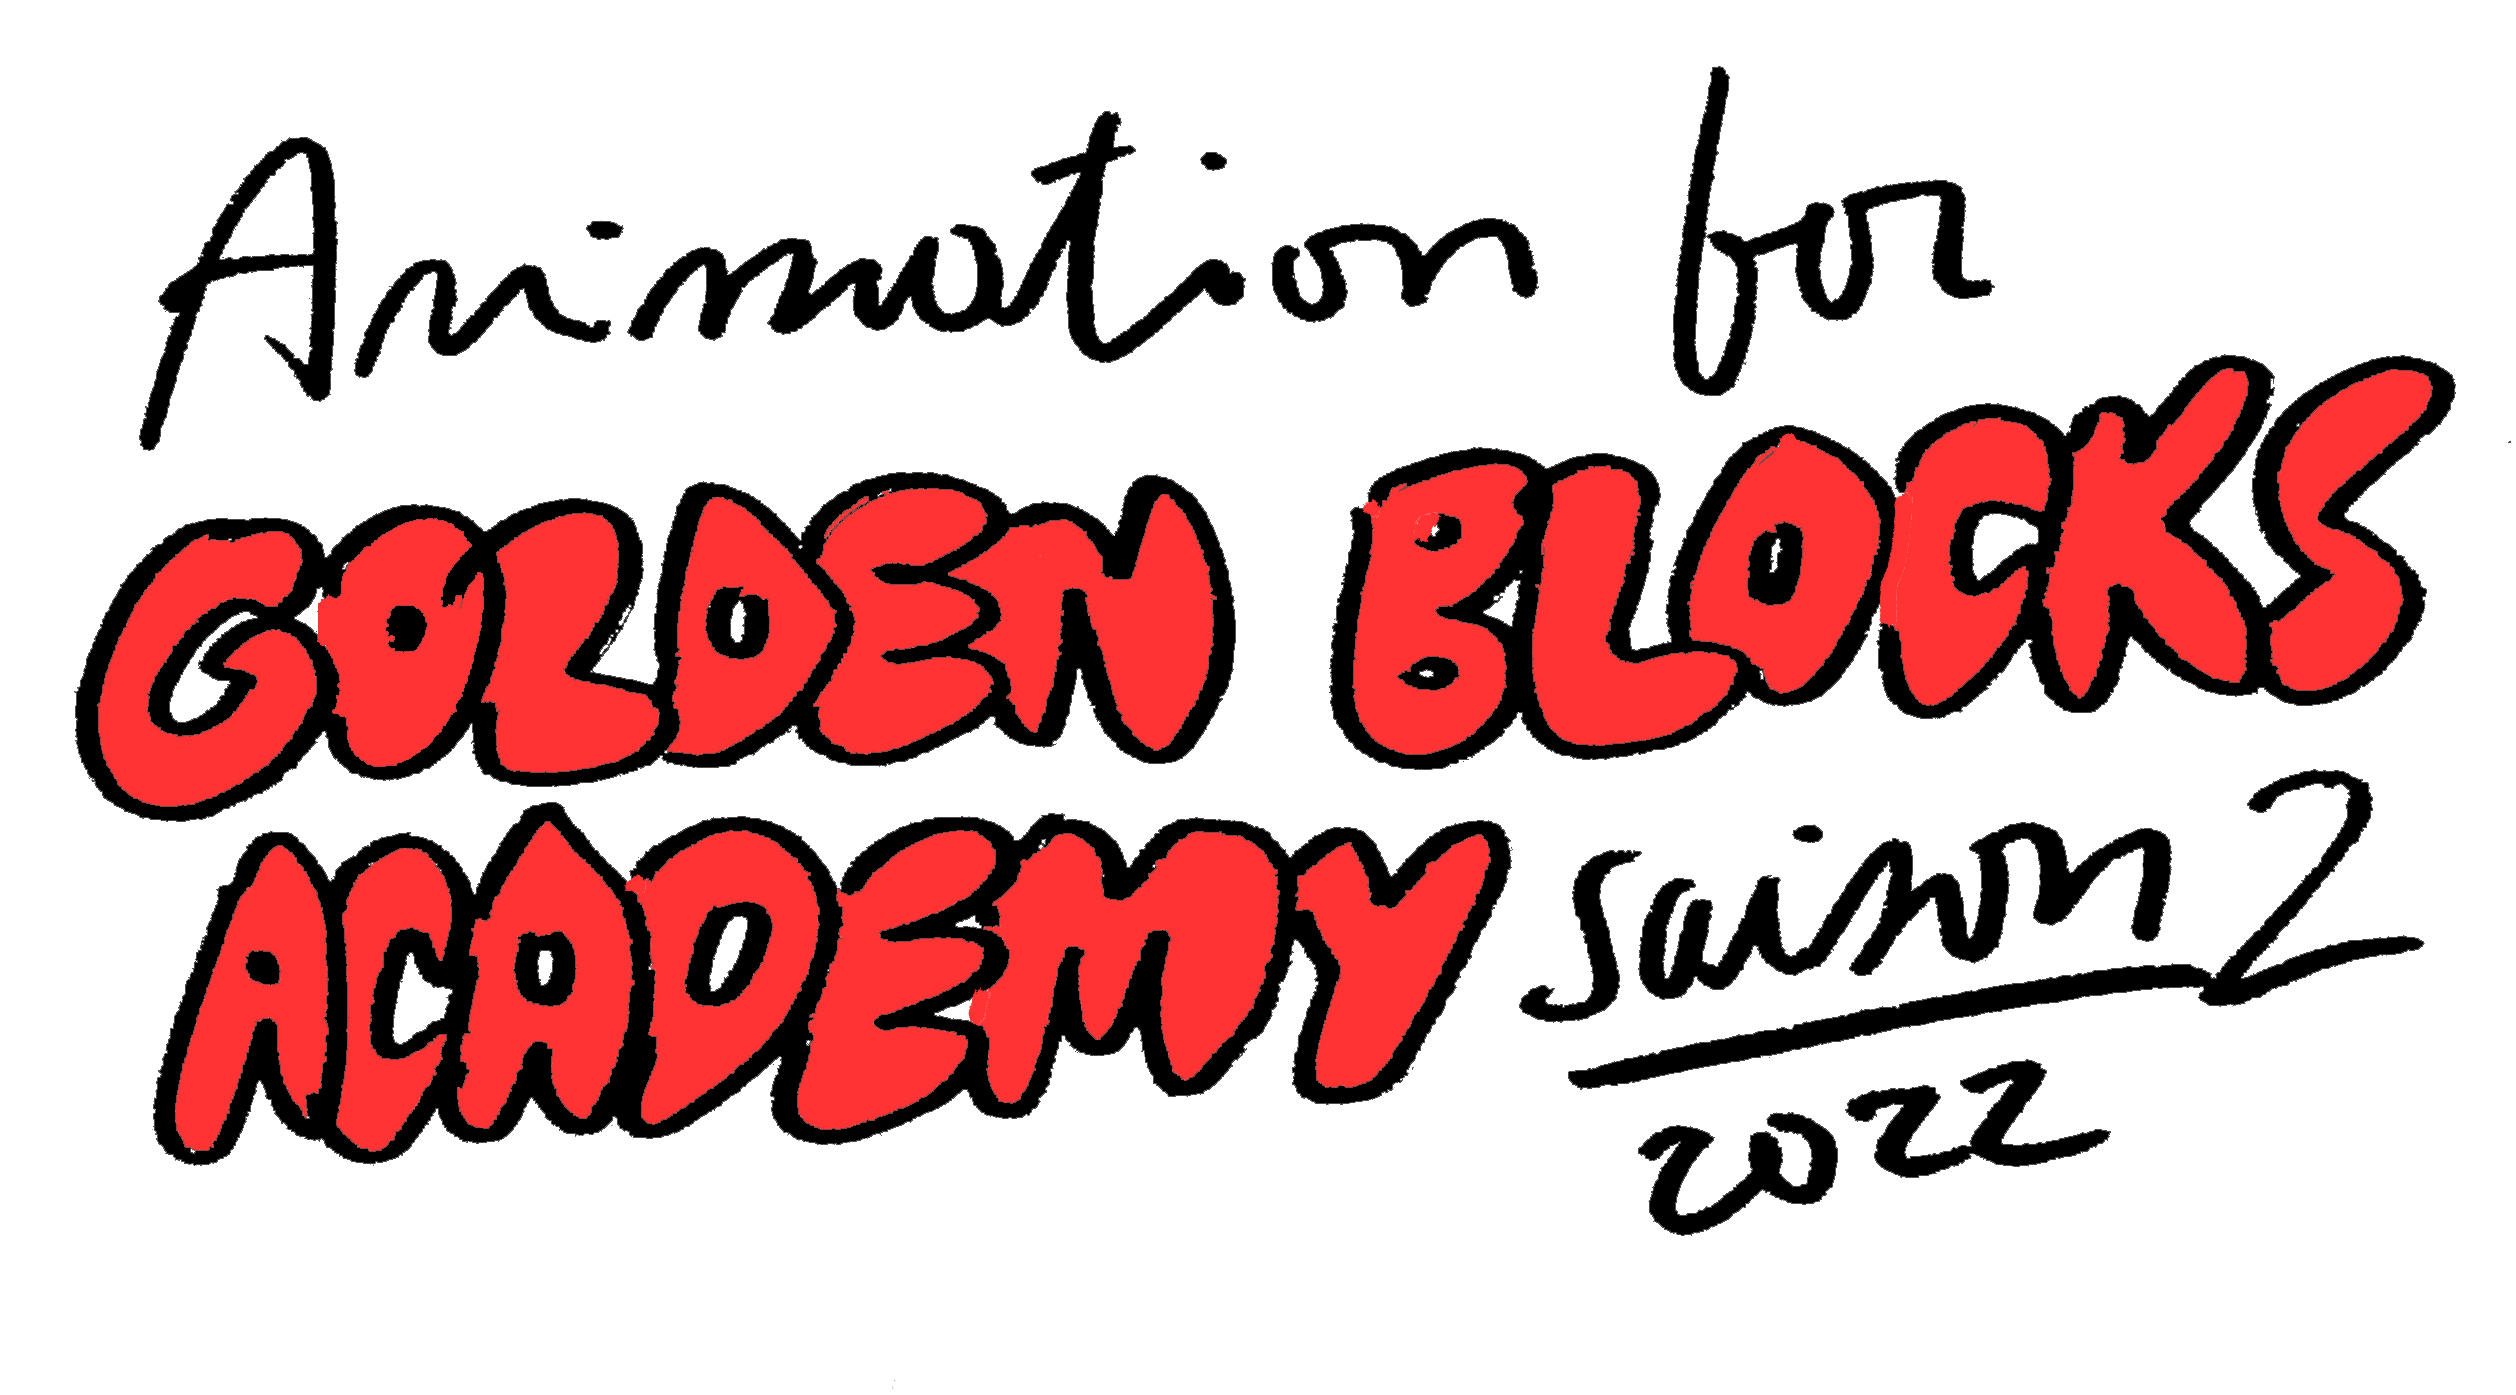 Pierre Thyss Golden Blocks Academy saison 2